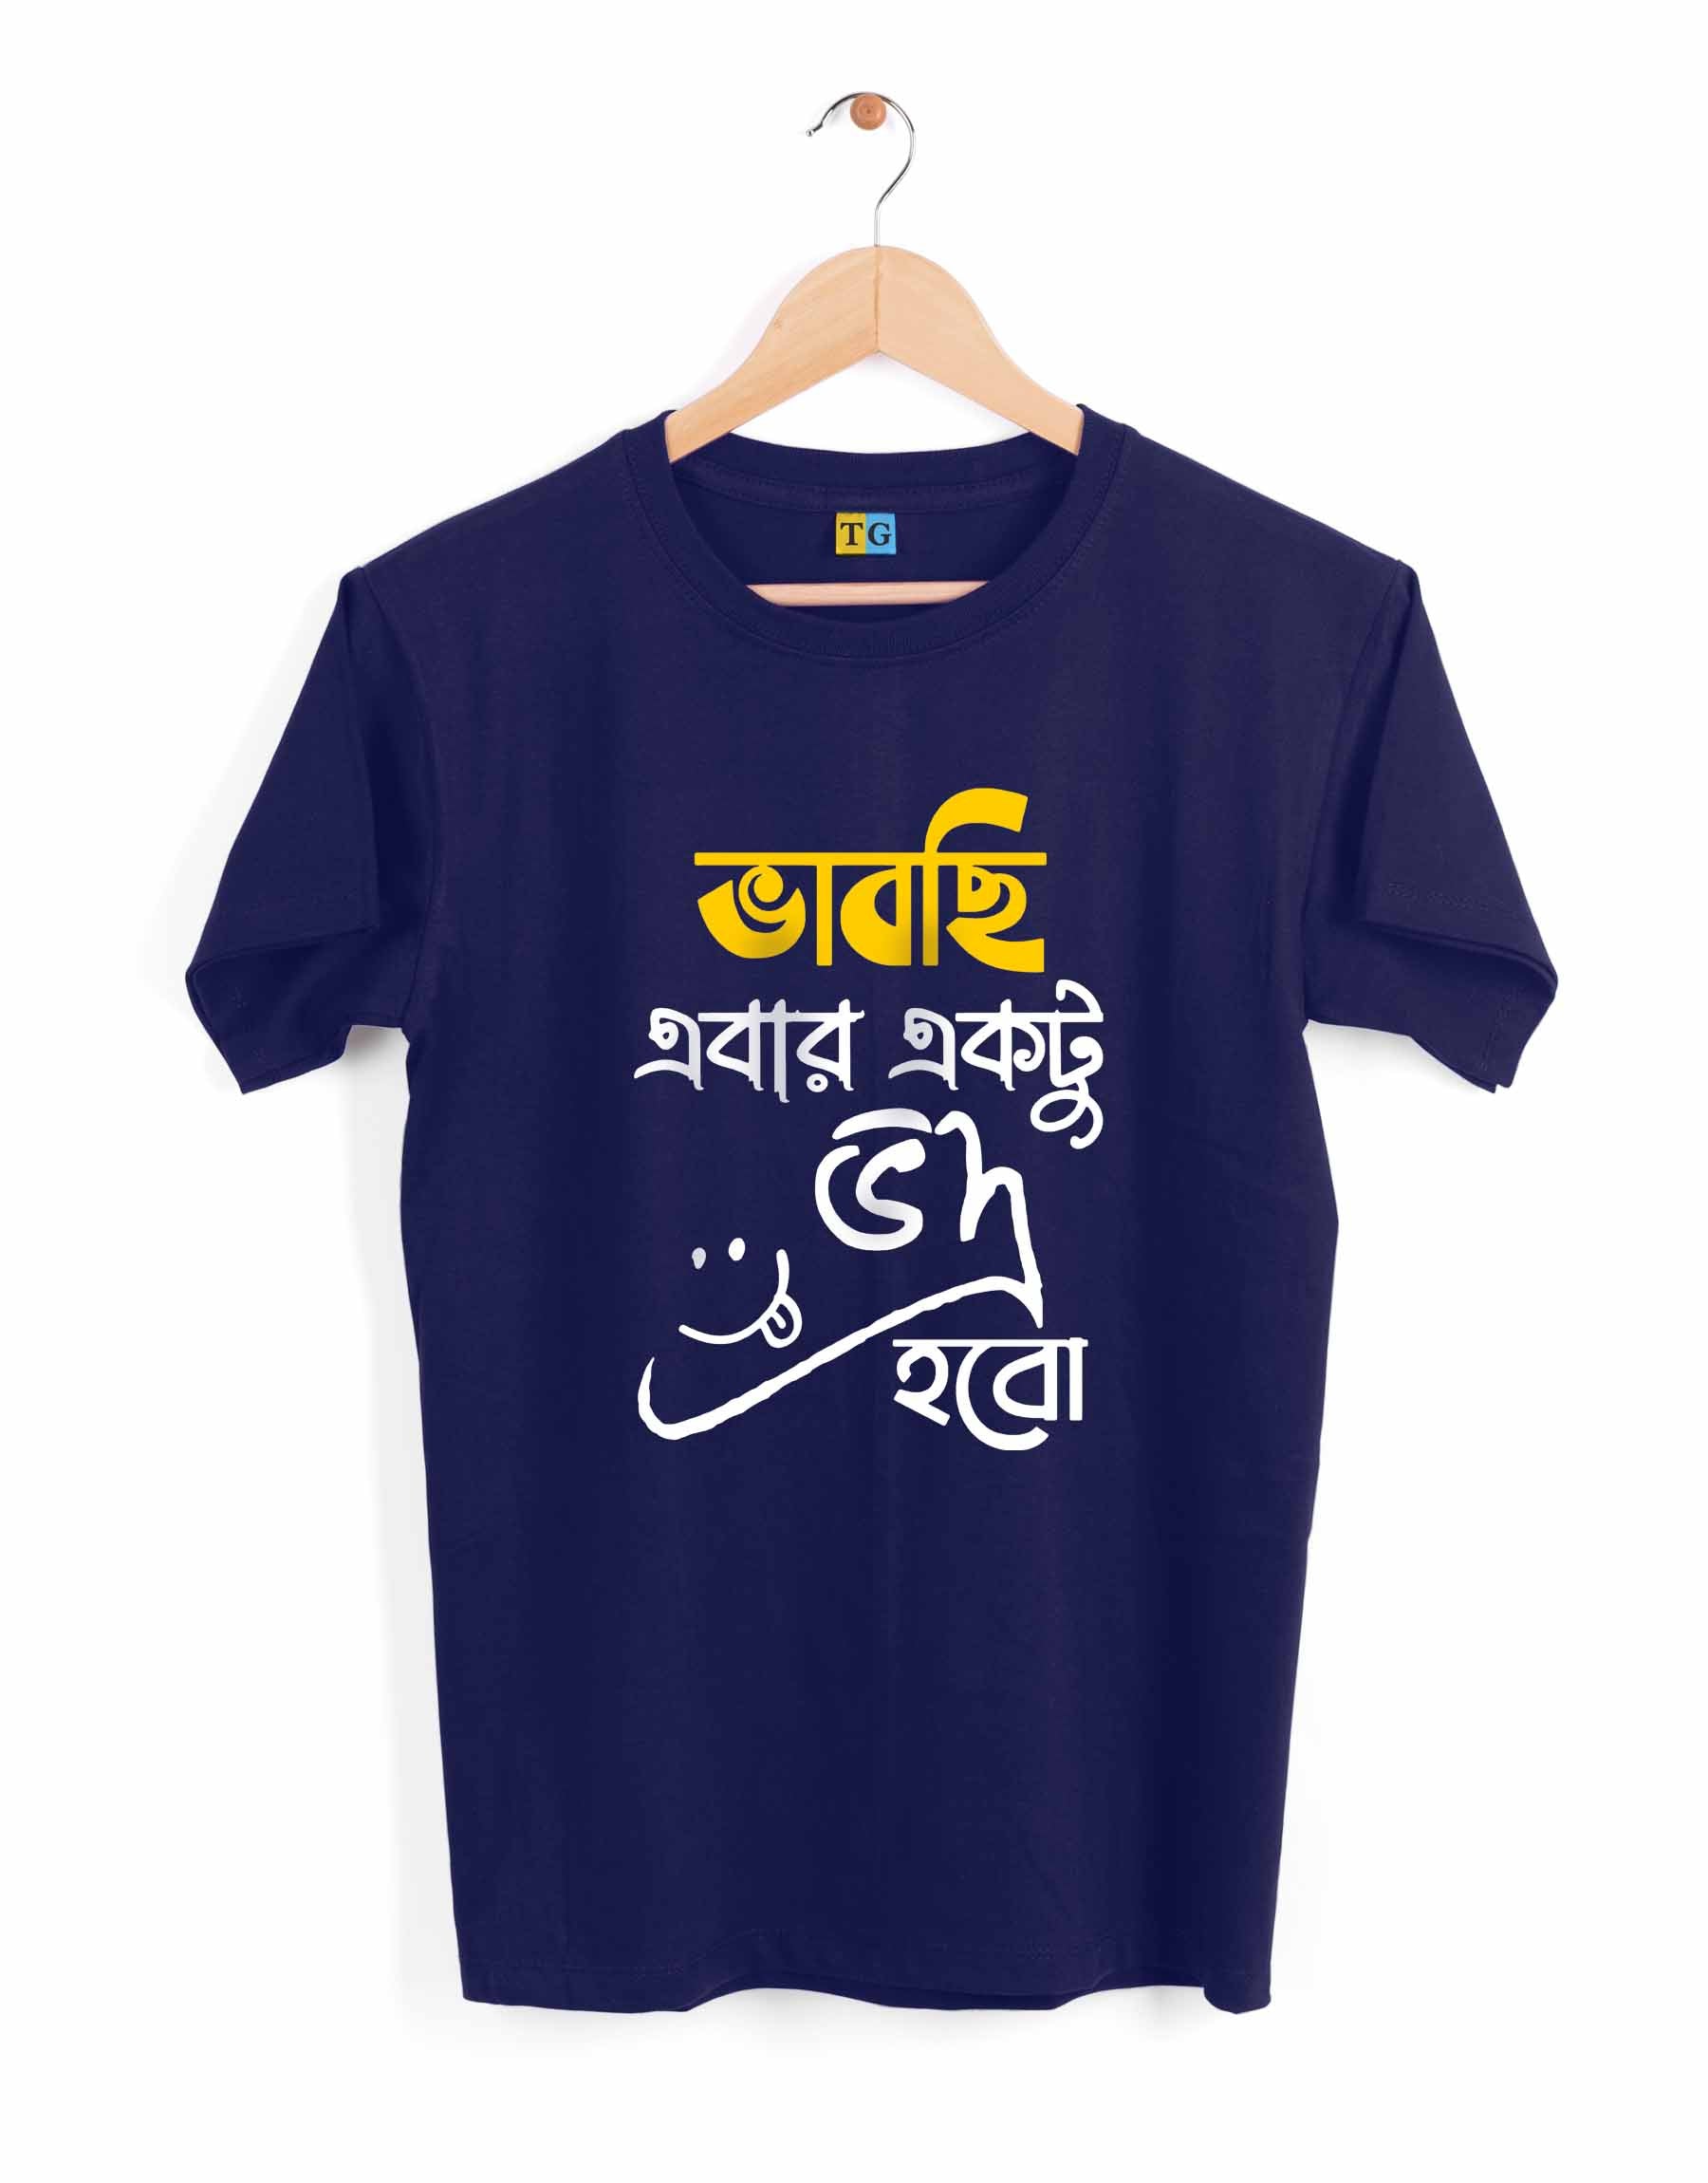 Bhabchi Eber Ektu Voddro Habo - TEEGURUJI Bengali T shirt - 499.00 - TEEGURUJI - Free Shipping